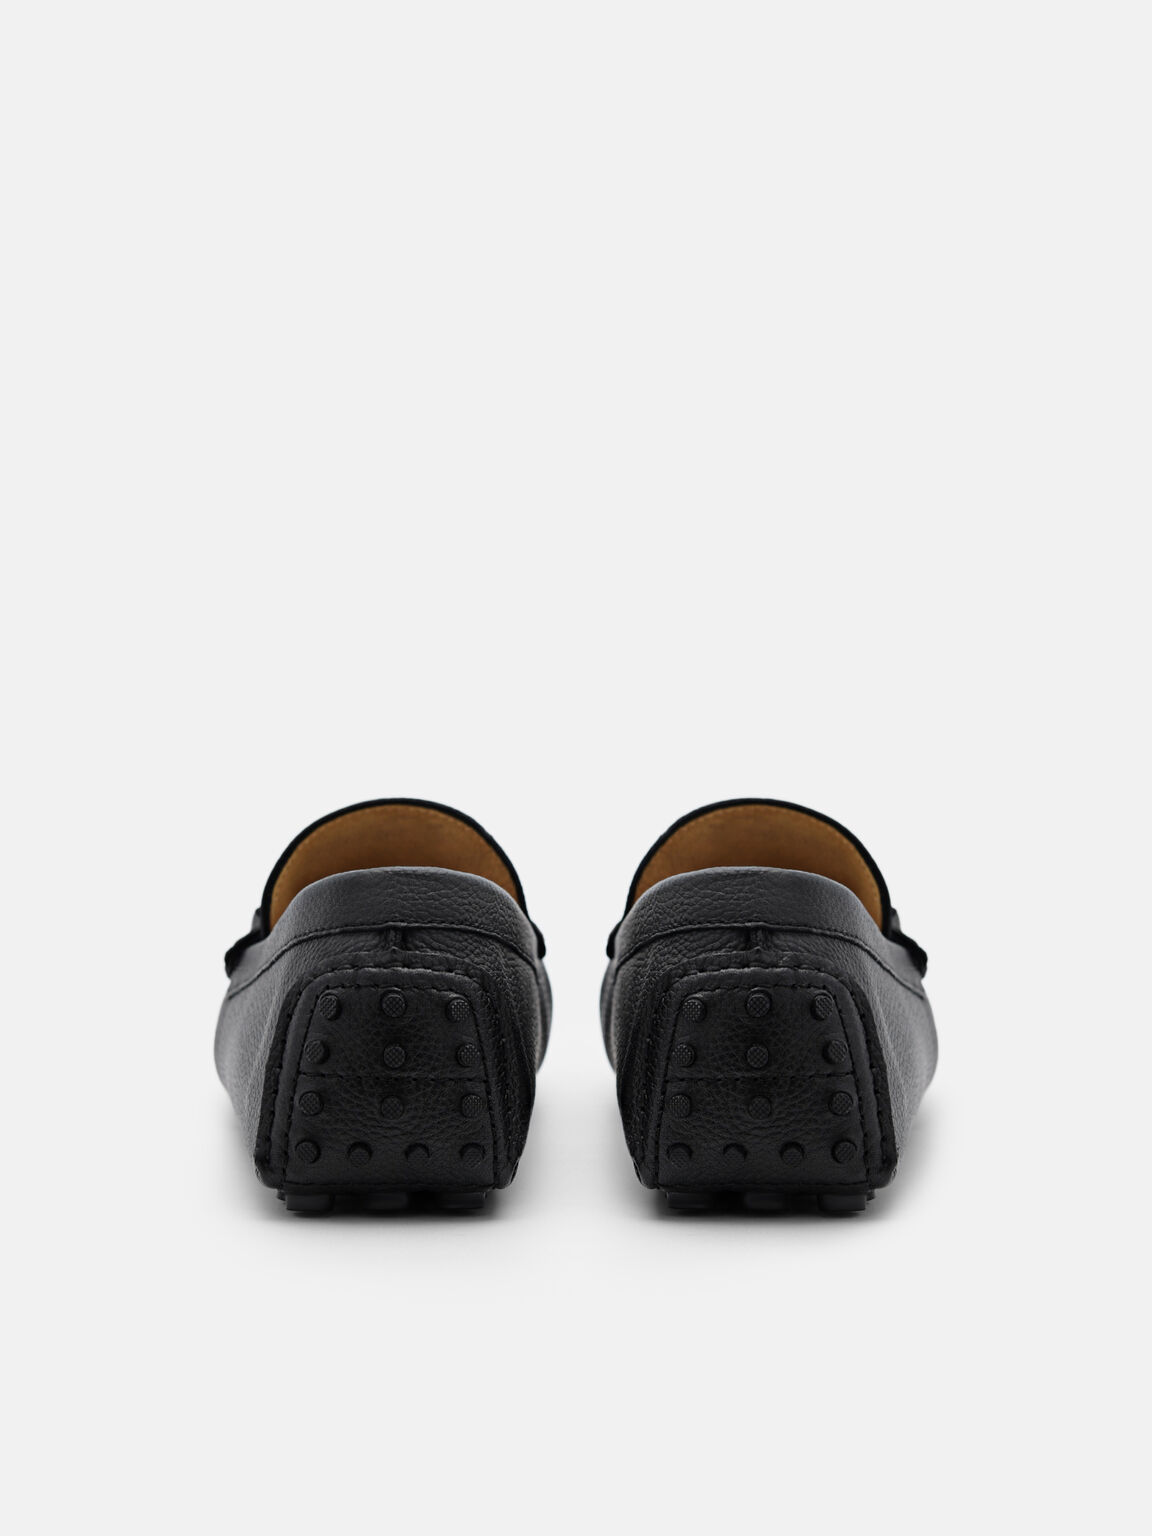 Jackson Leather Driving Shoes, Black